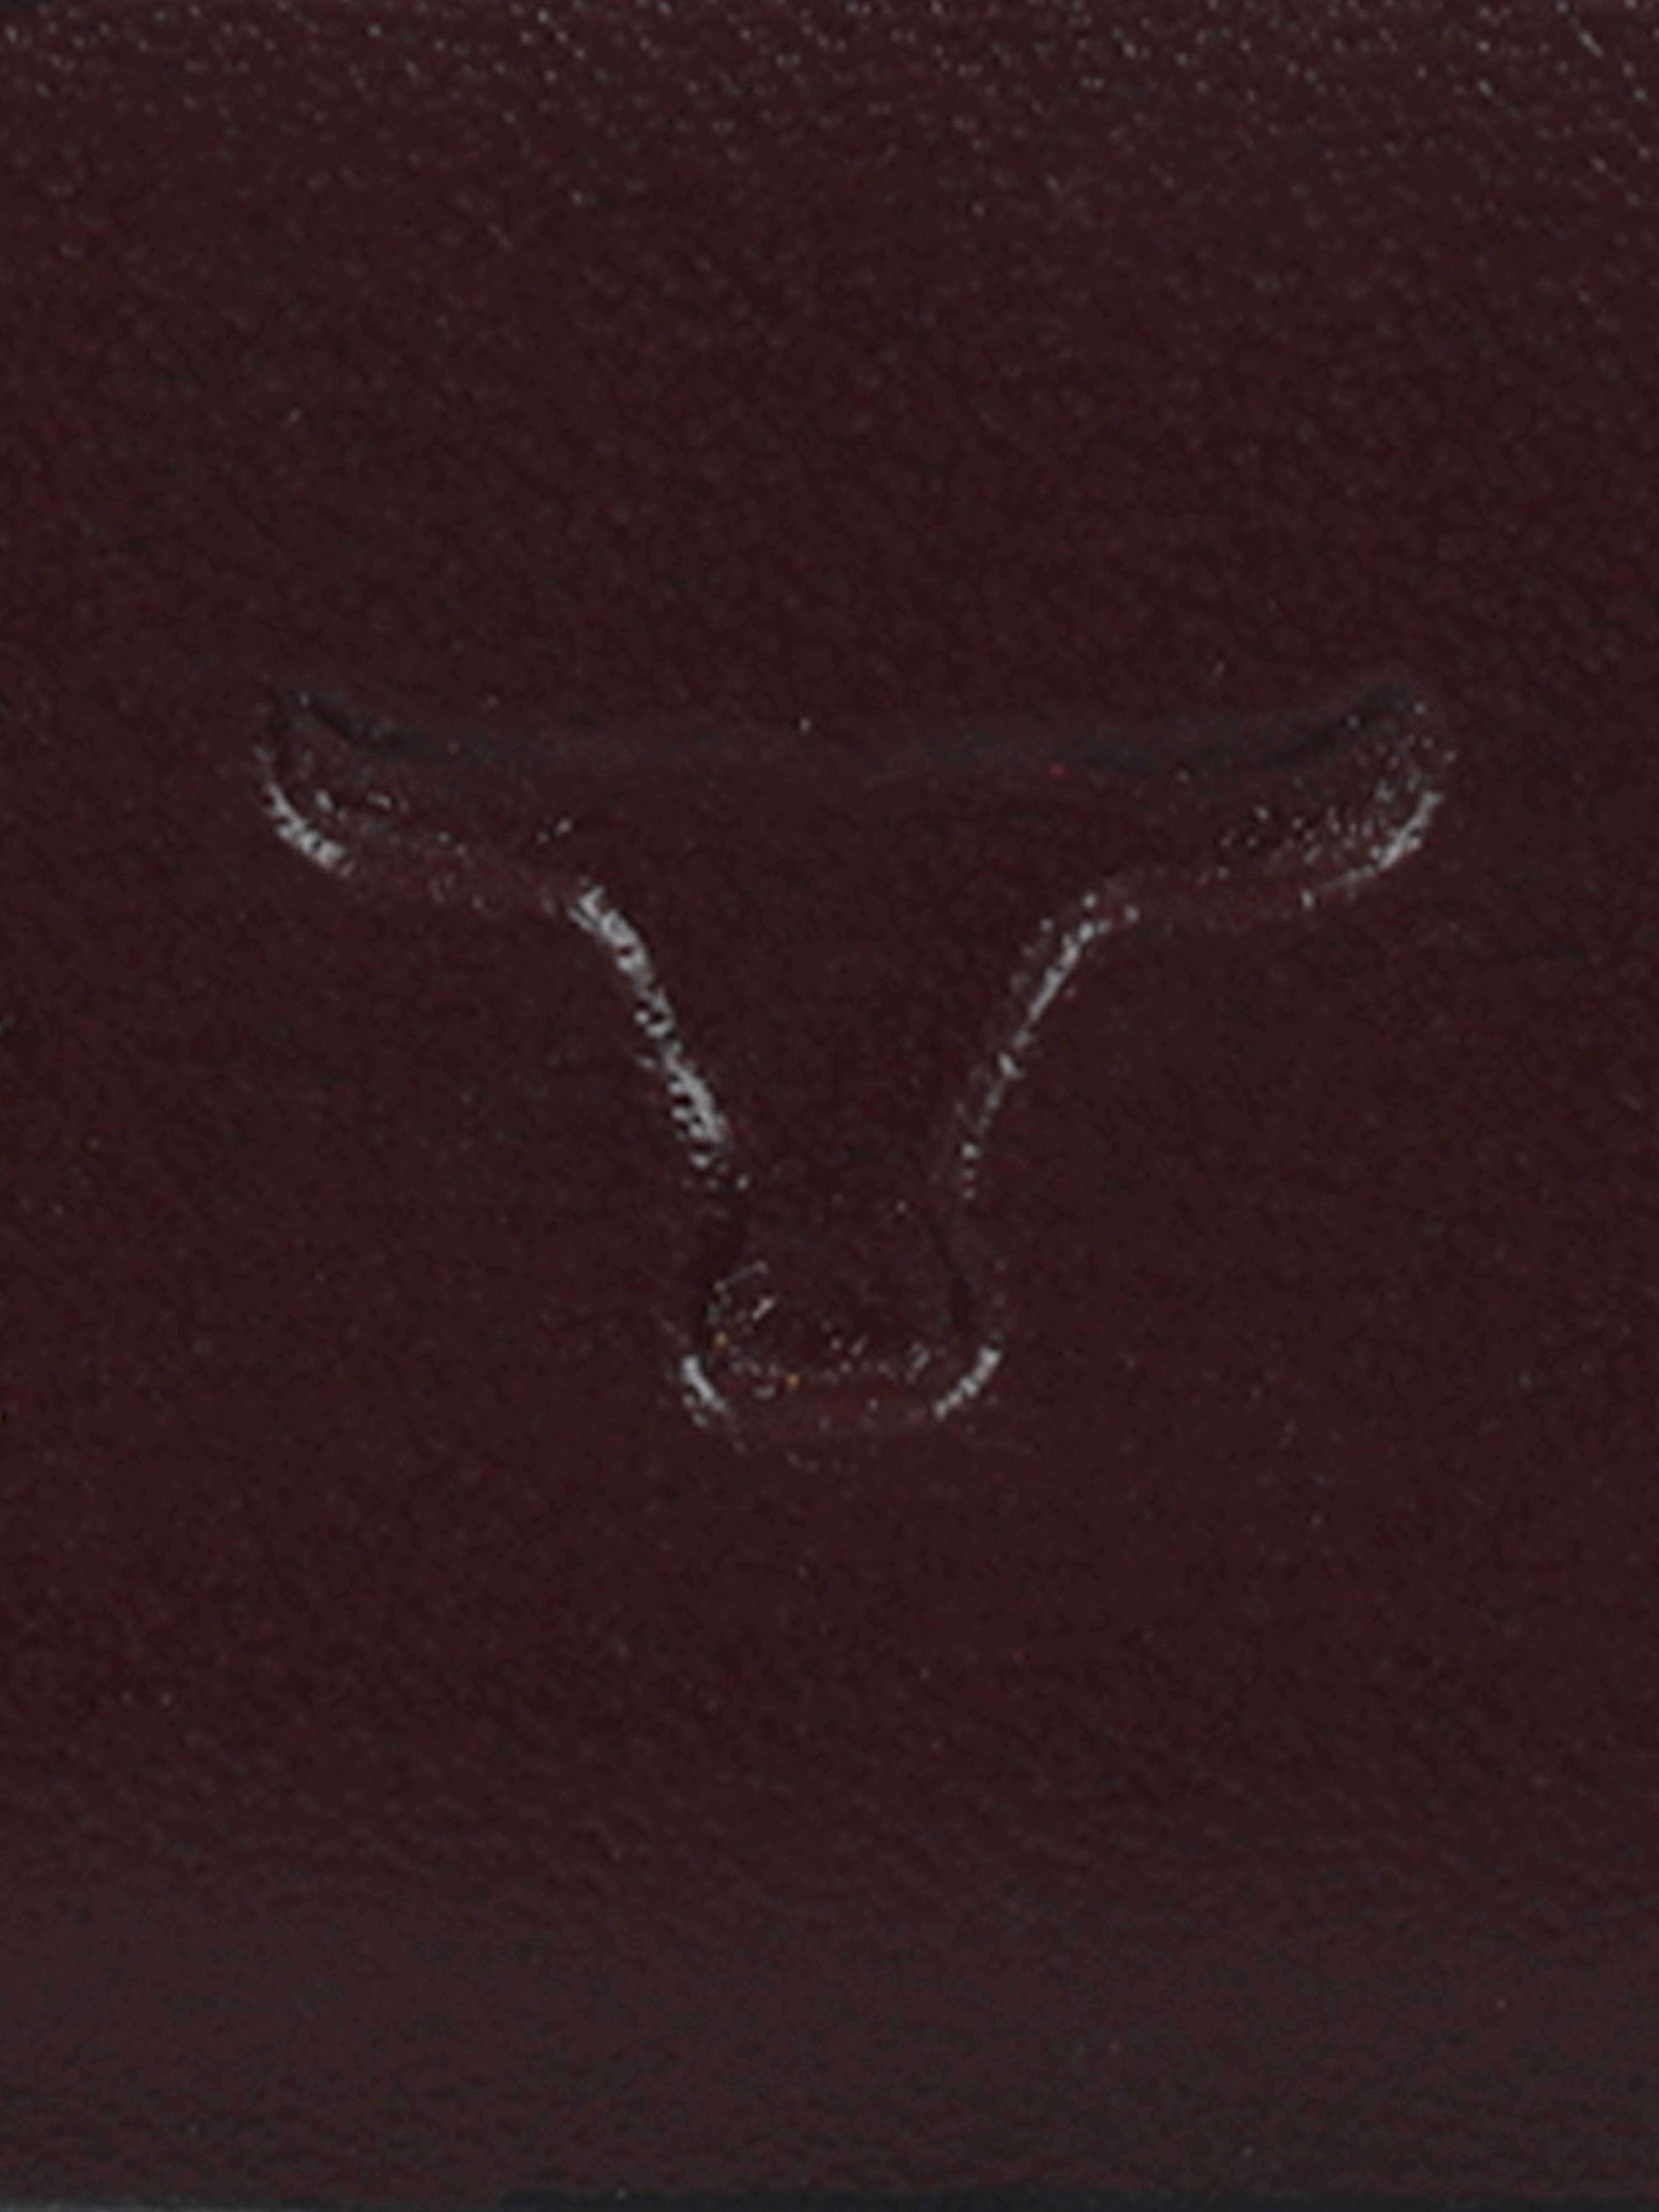 Bulchee Premium Collections Women's Leather Belt